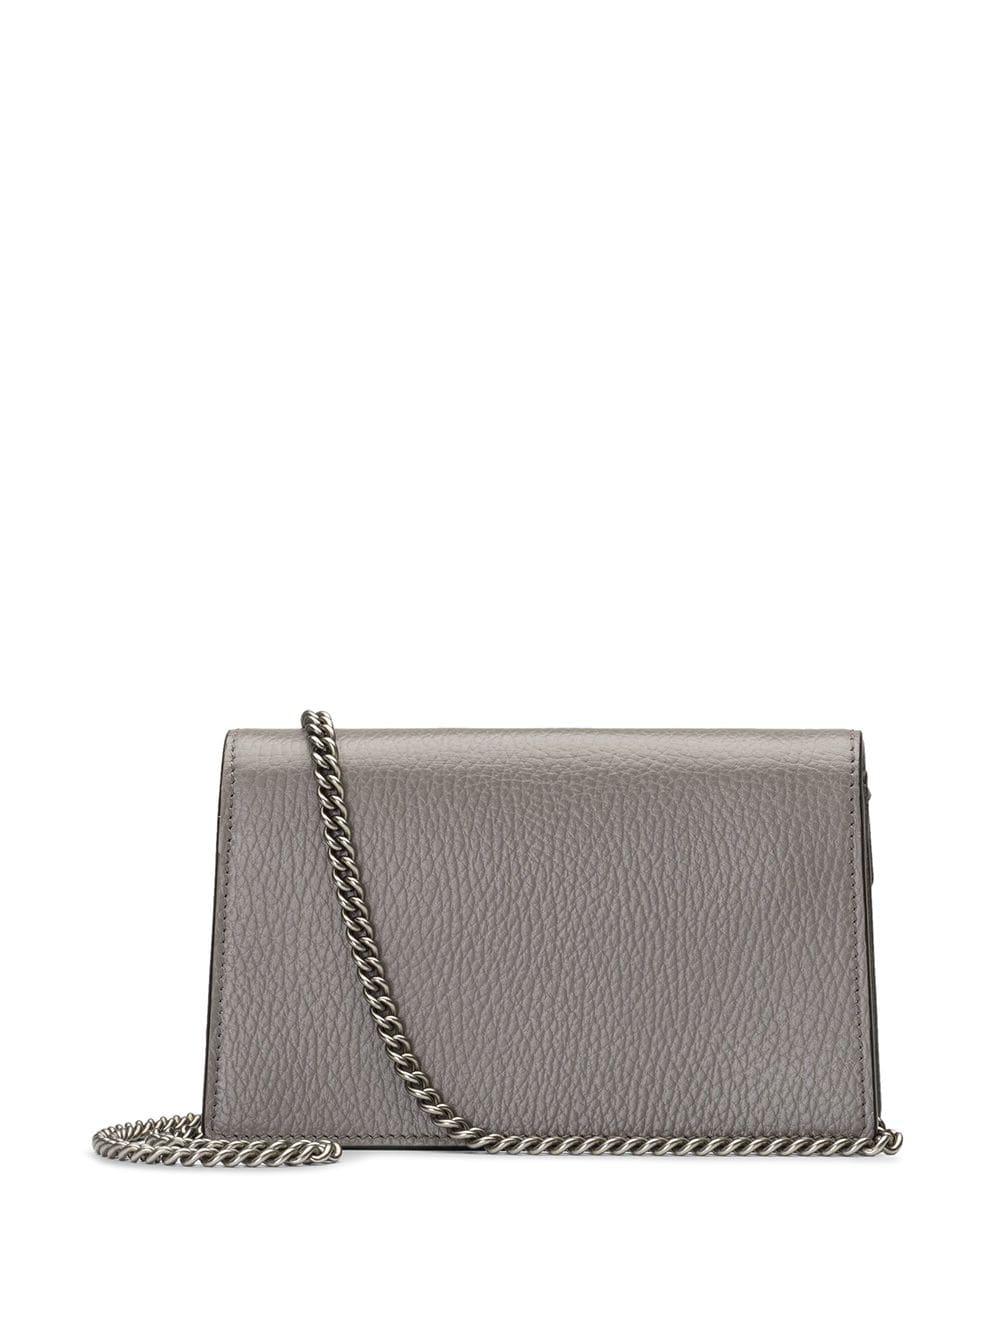 Gucci Dionysus Leather Super Mini Bag in Grey (Gray) - Lyst